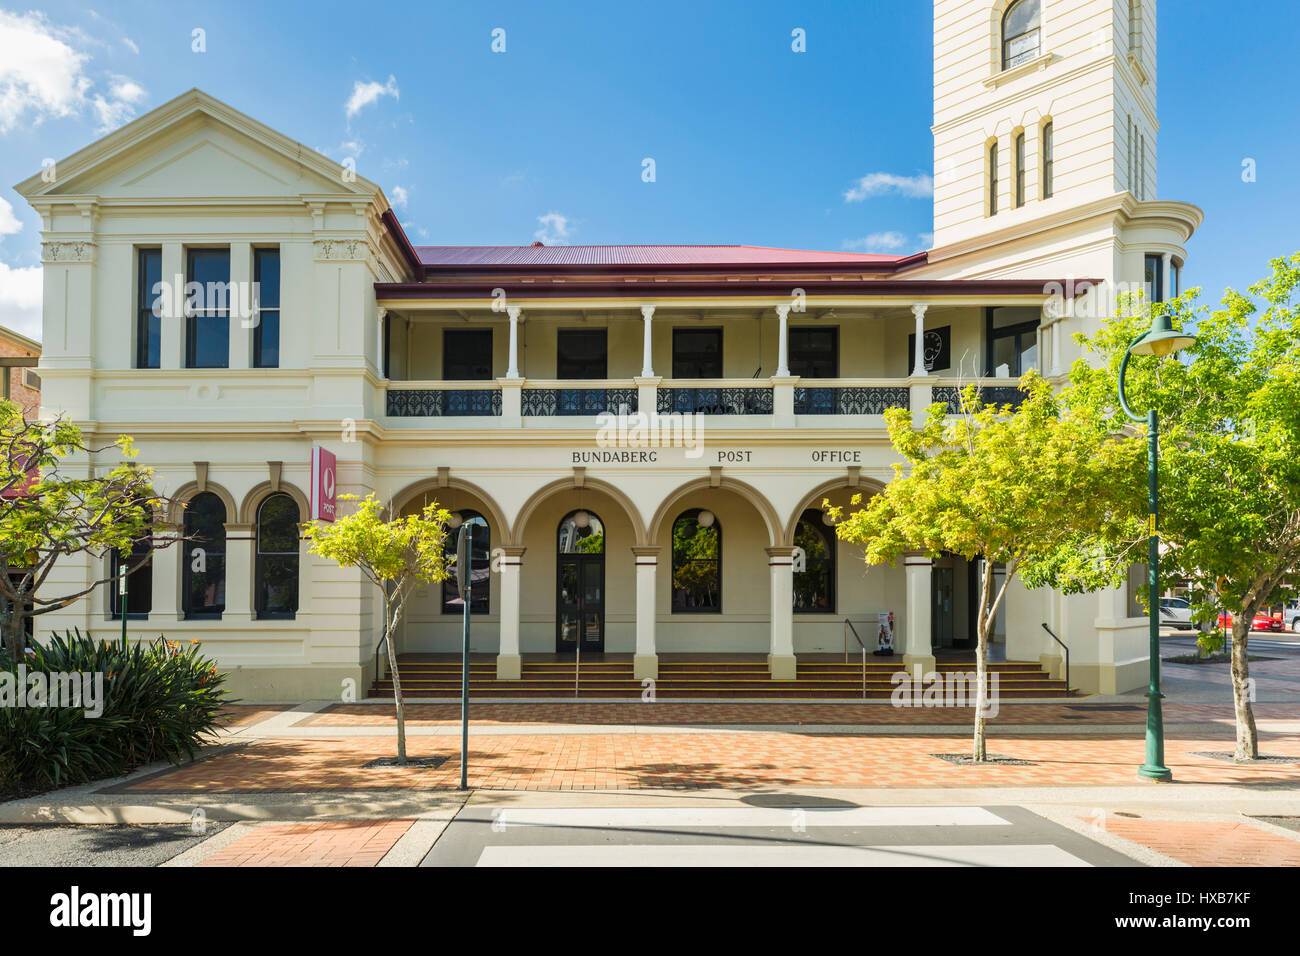 The Bundaberg Post Office and clock tower building on Bourbong Street.  Bundaberg, Queensland, Australia Stock Photo